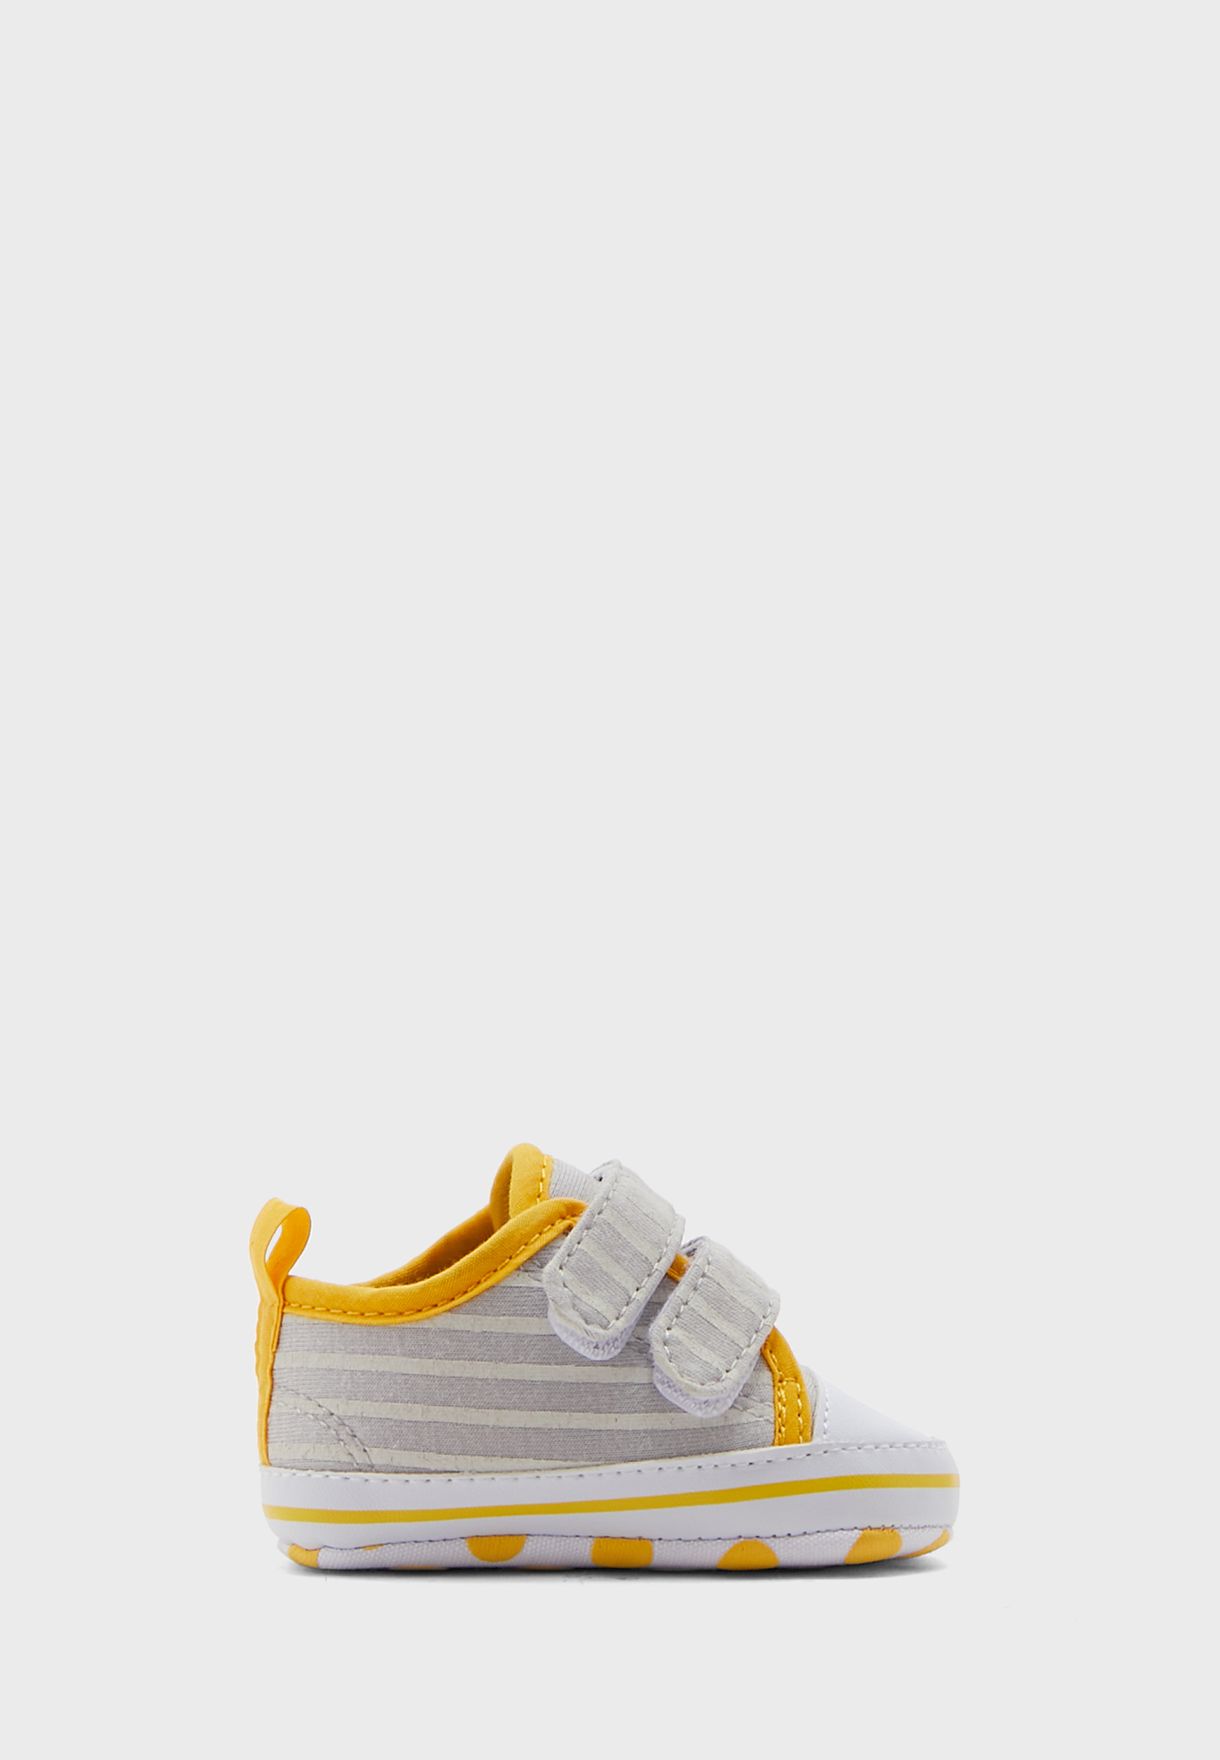 Infant Velcro Sneakers